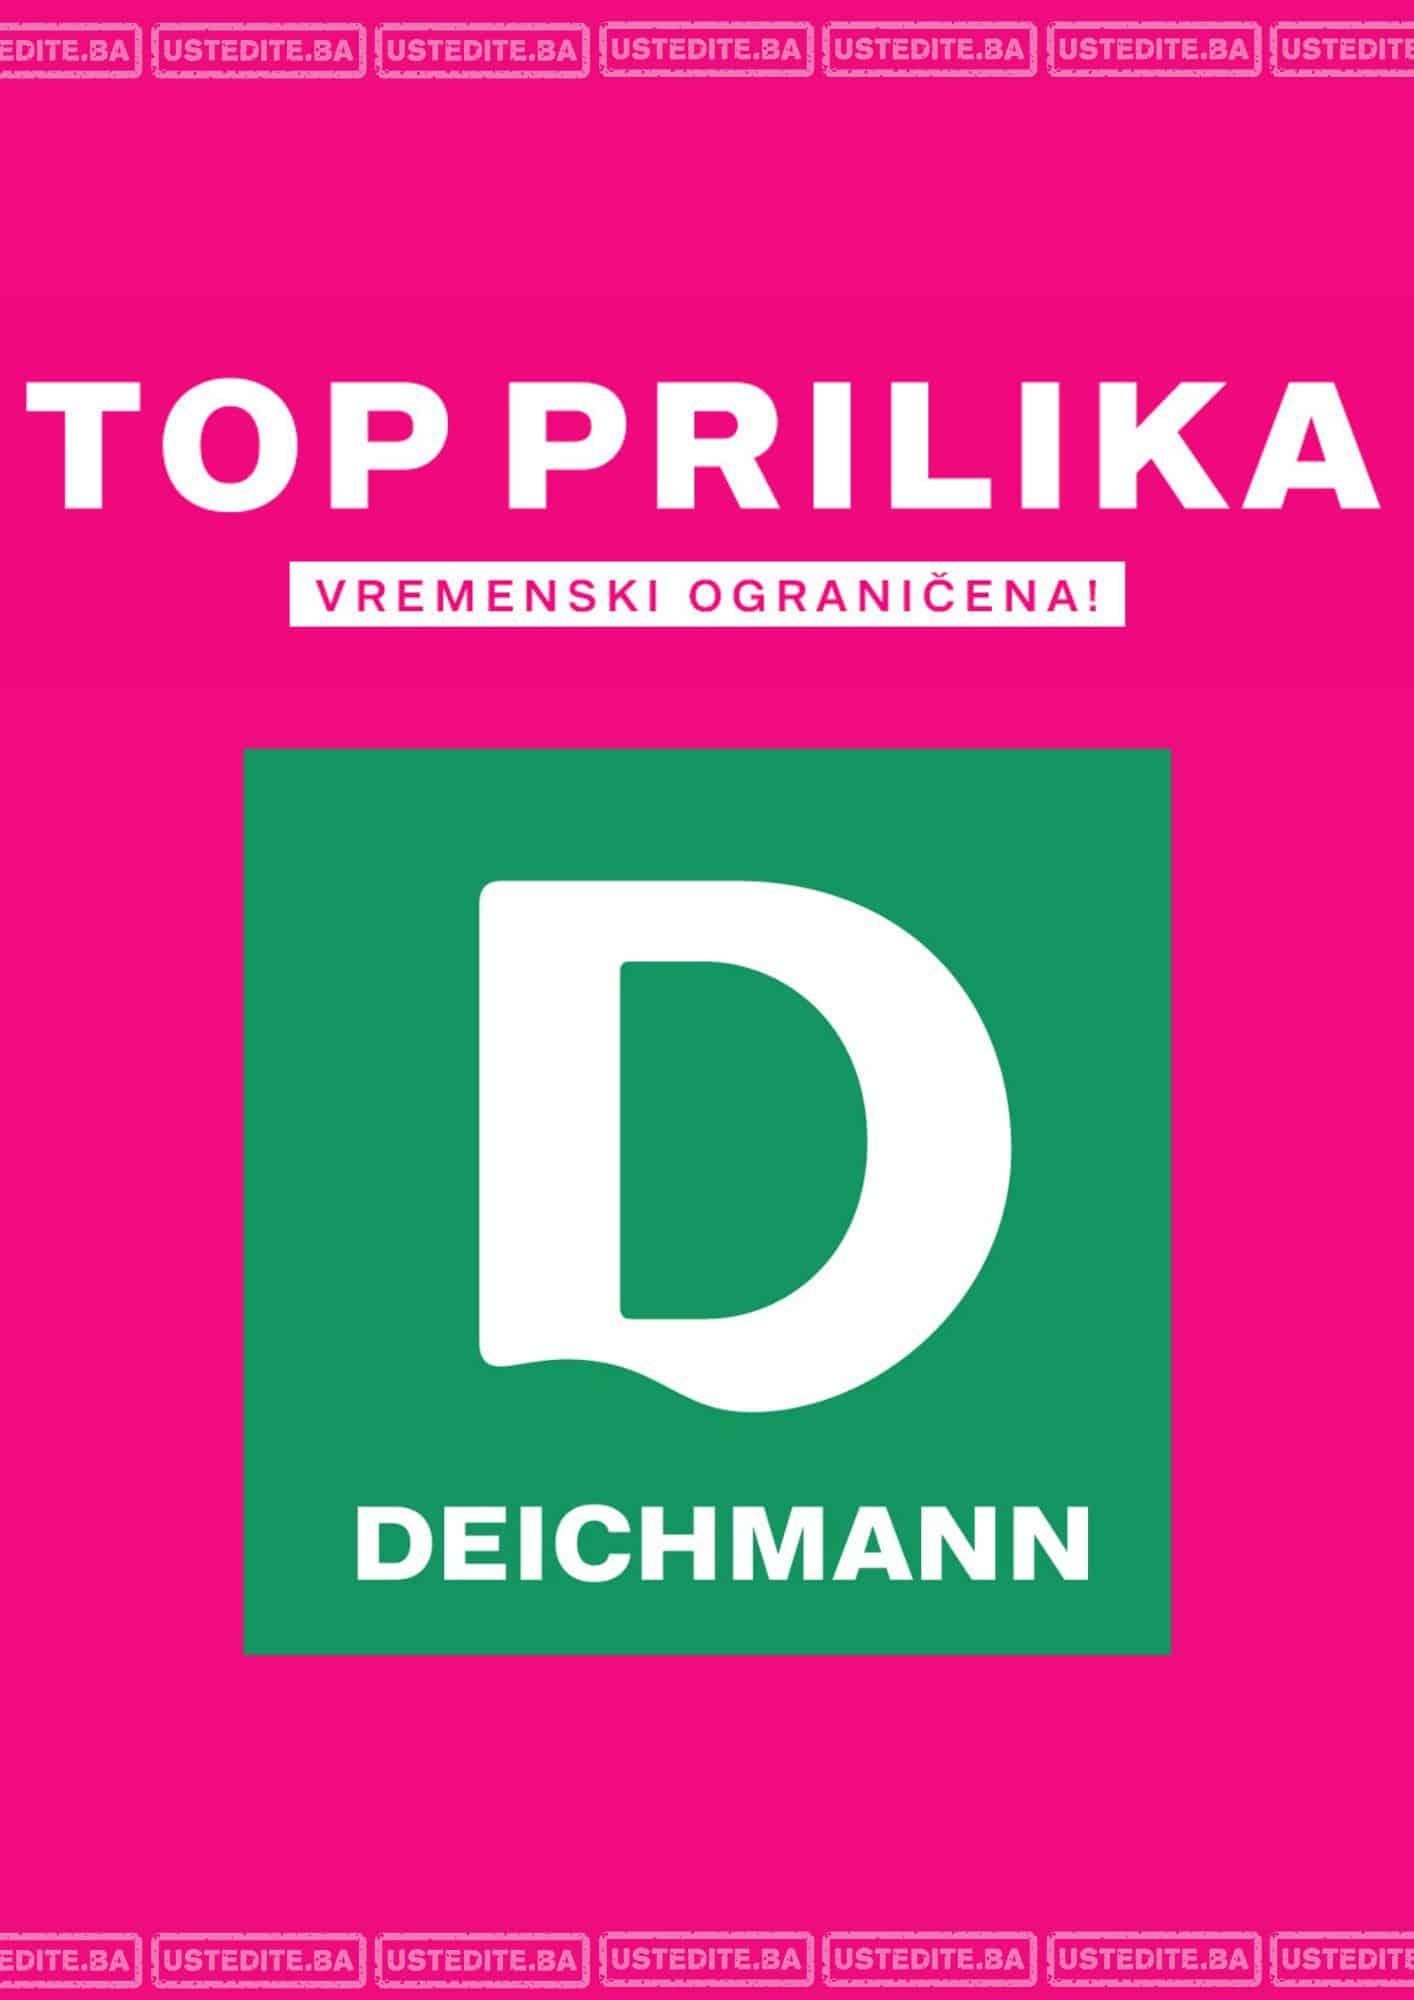 Deichmann TOP prilika vremenski ogranicena